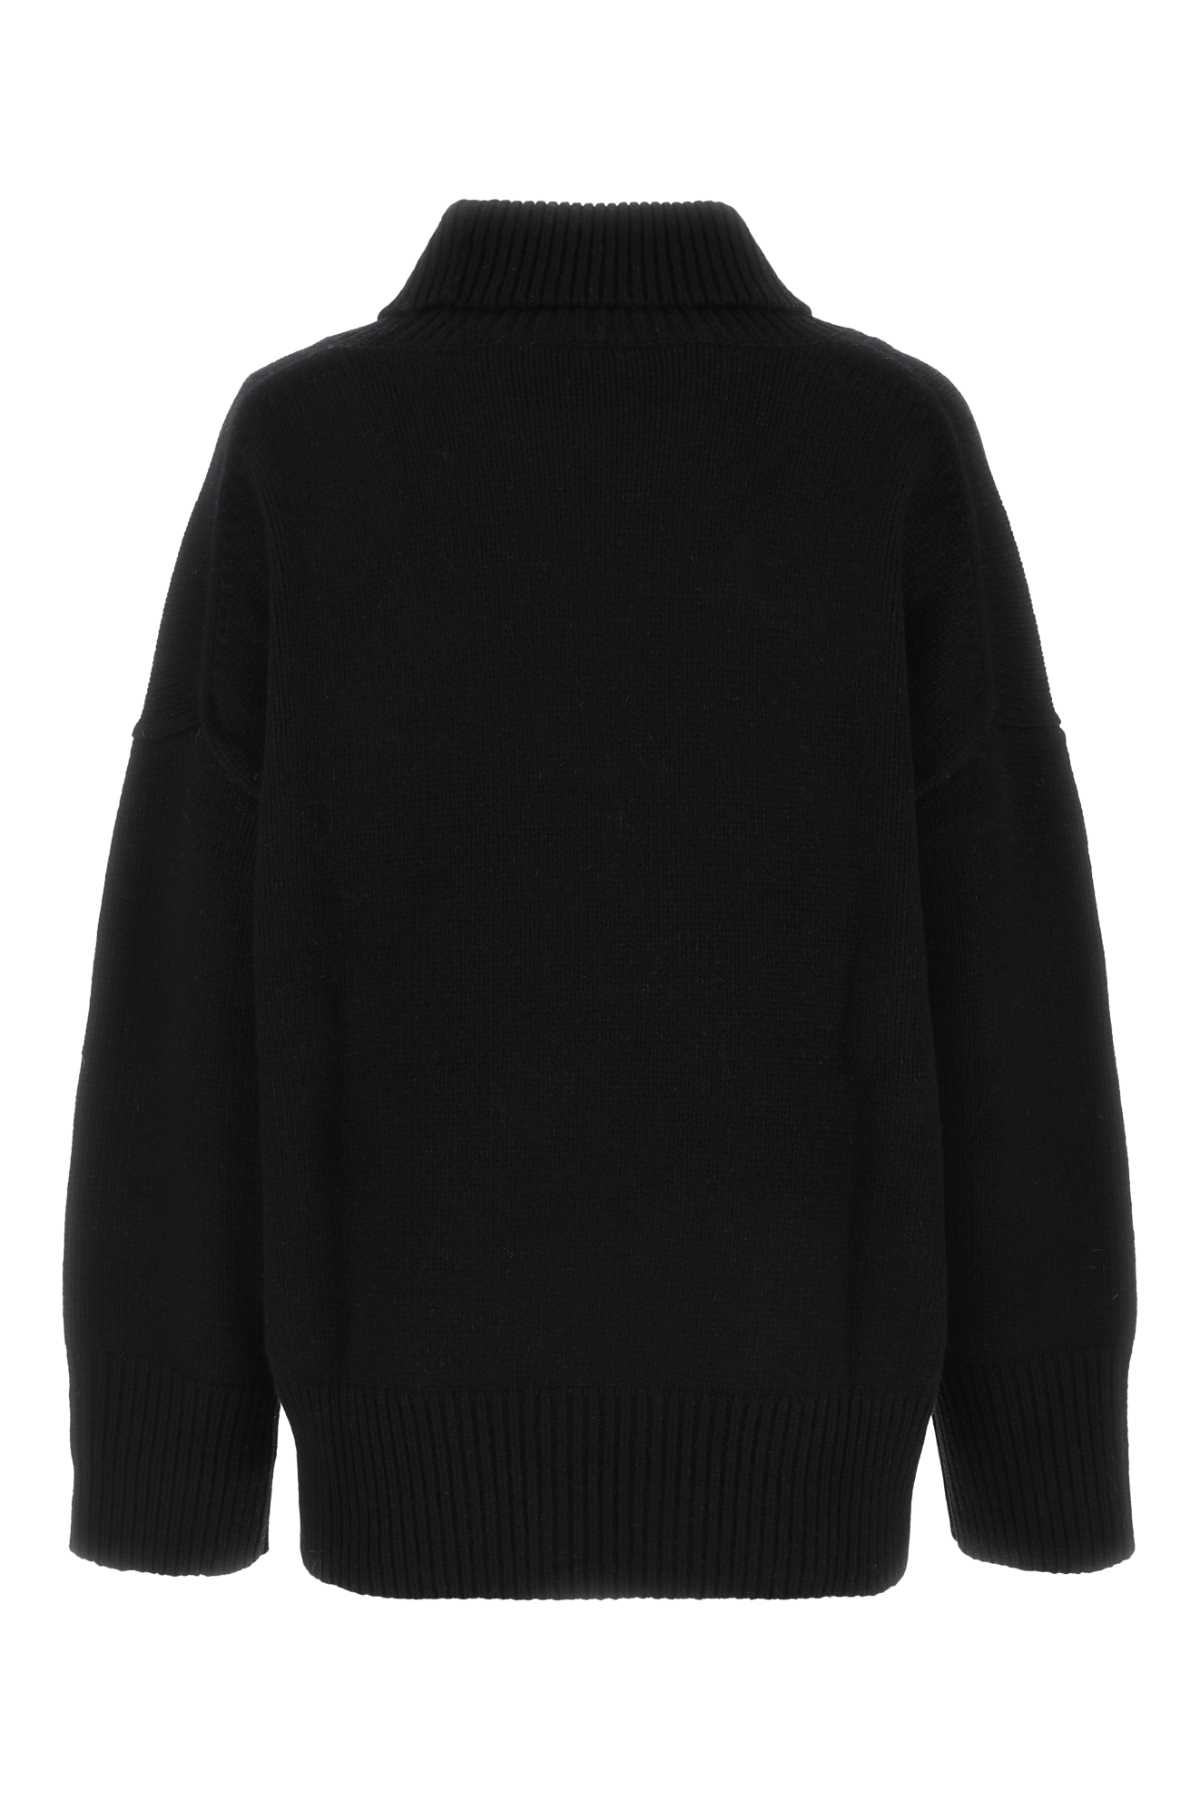 Chloé Black Cashmere Oversize Sweater In 001